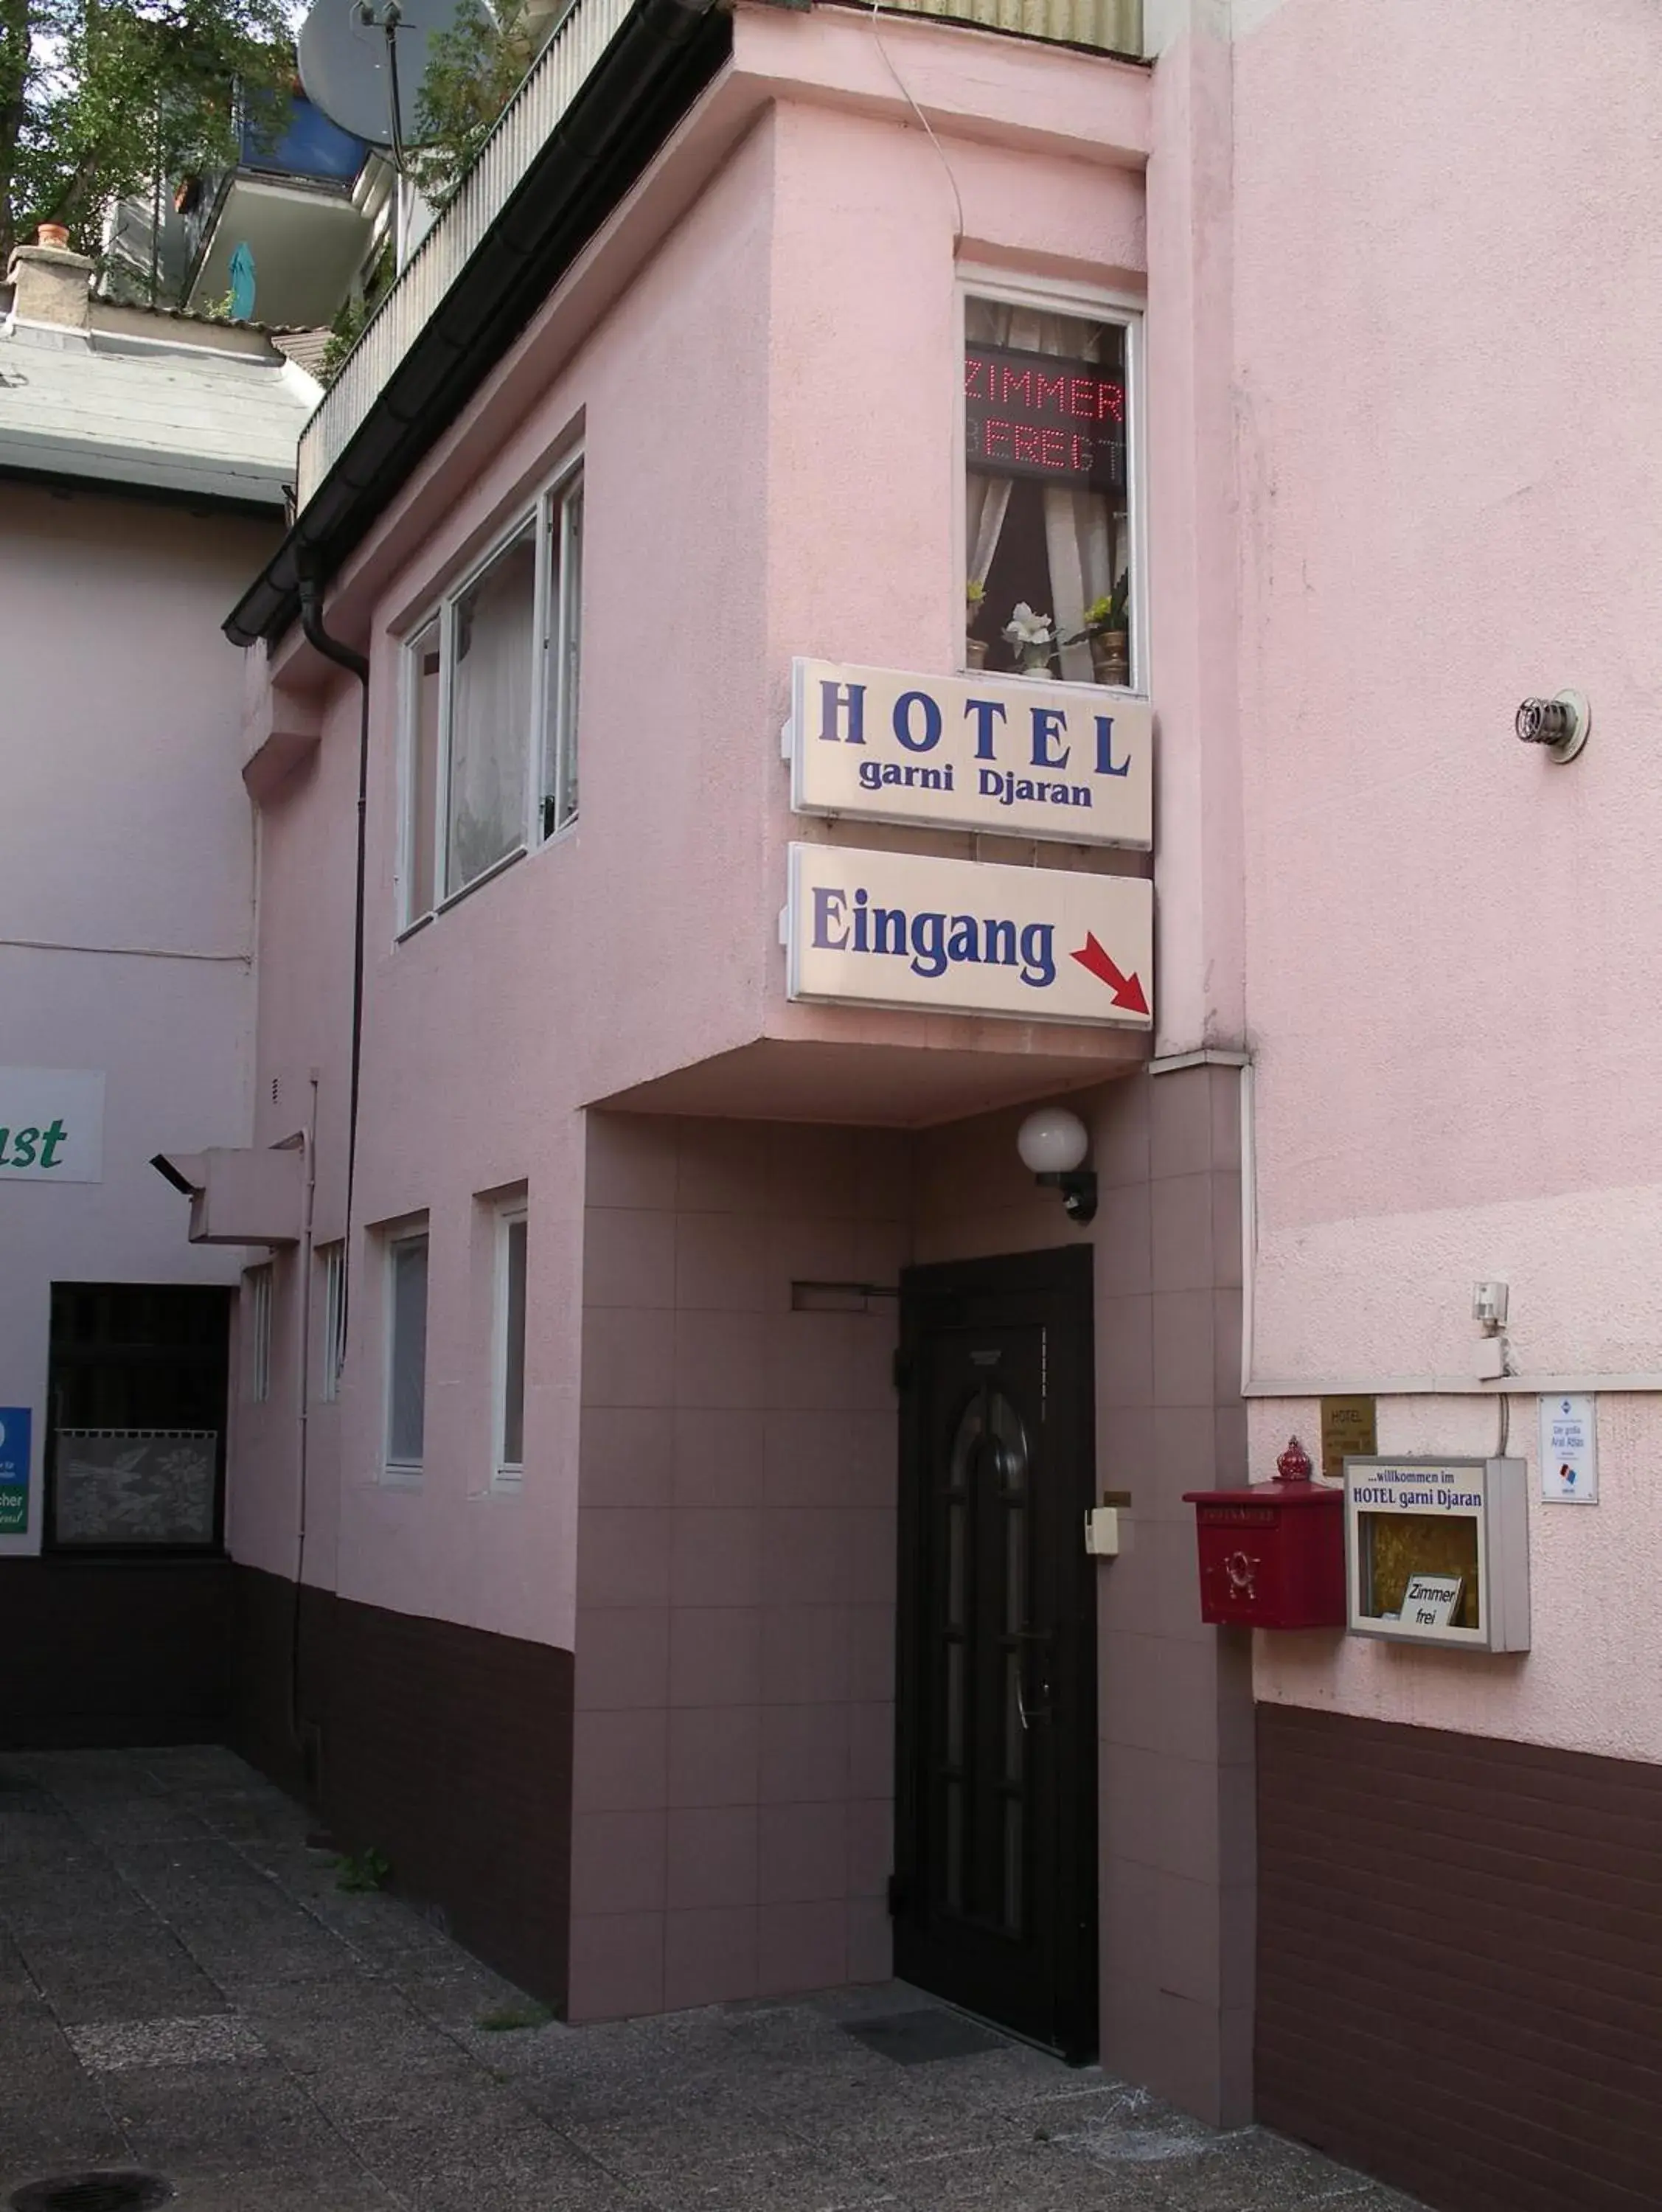 Facade/entrance in Hotel garni Djaran